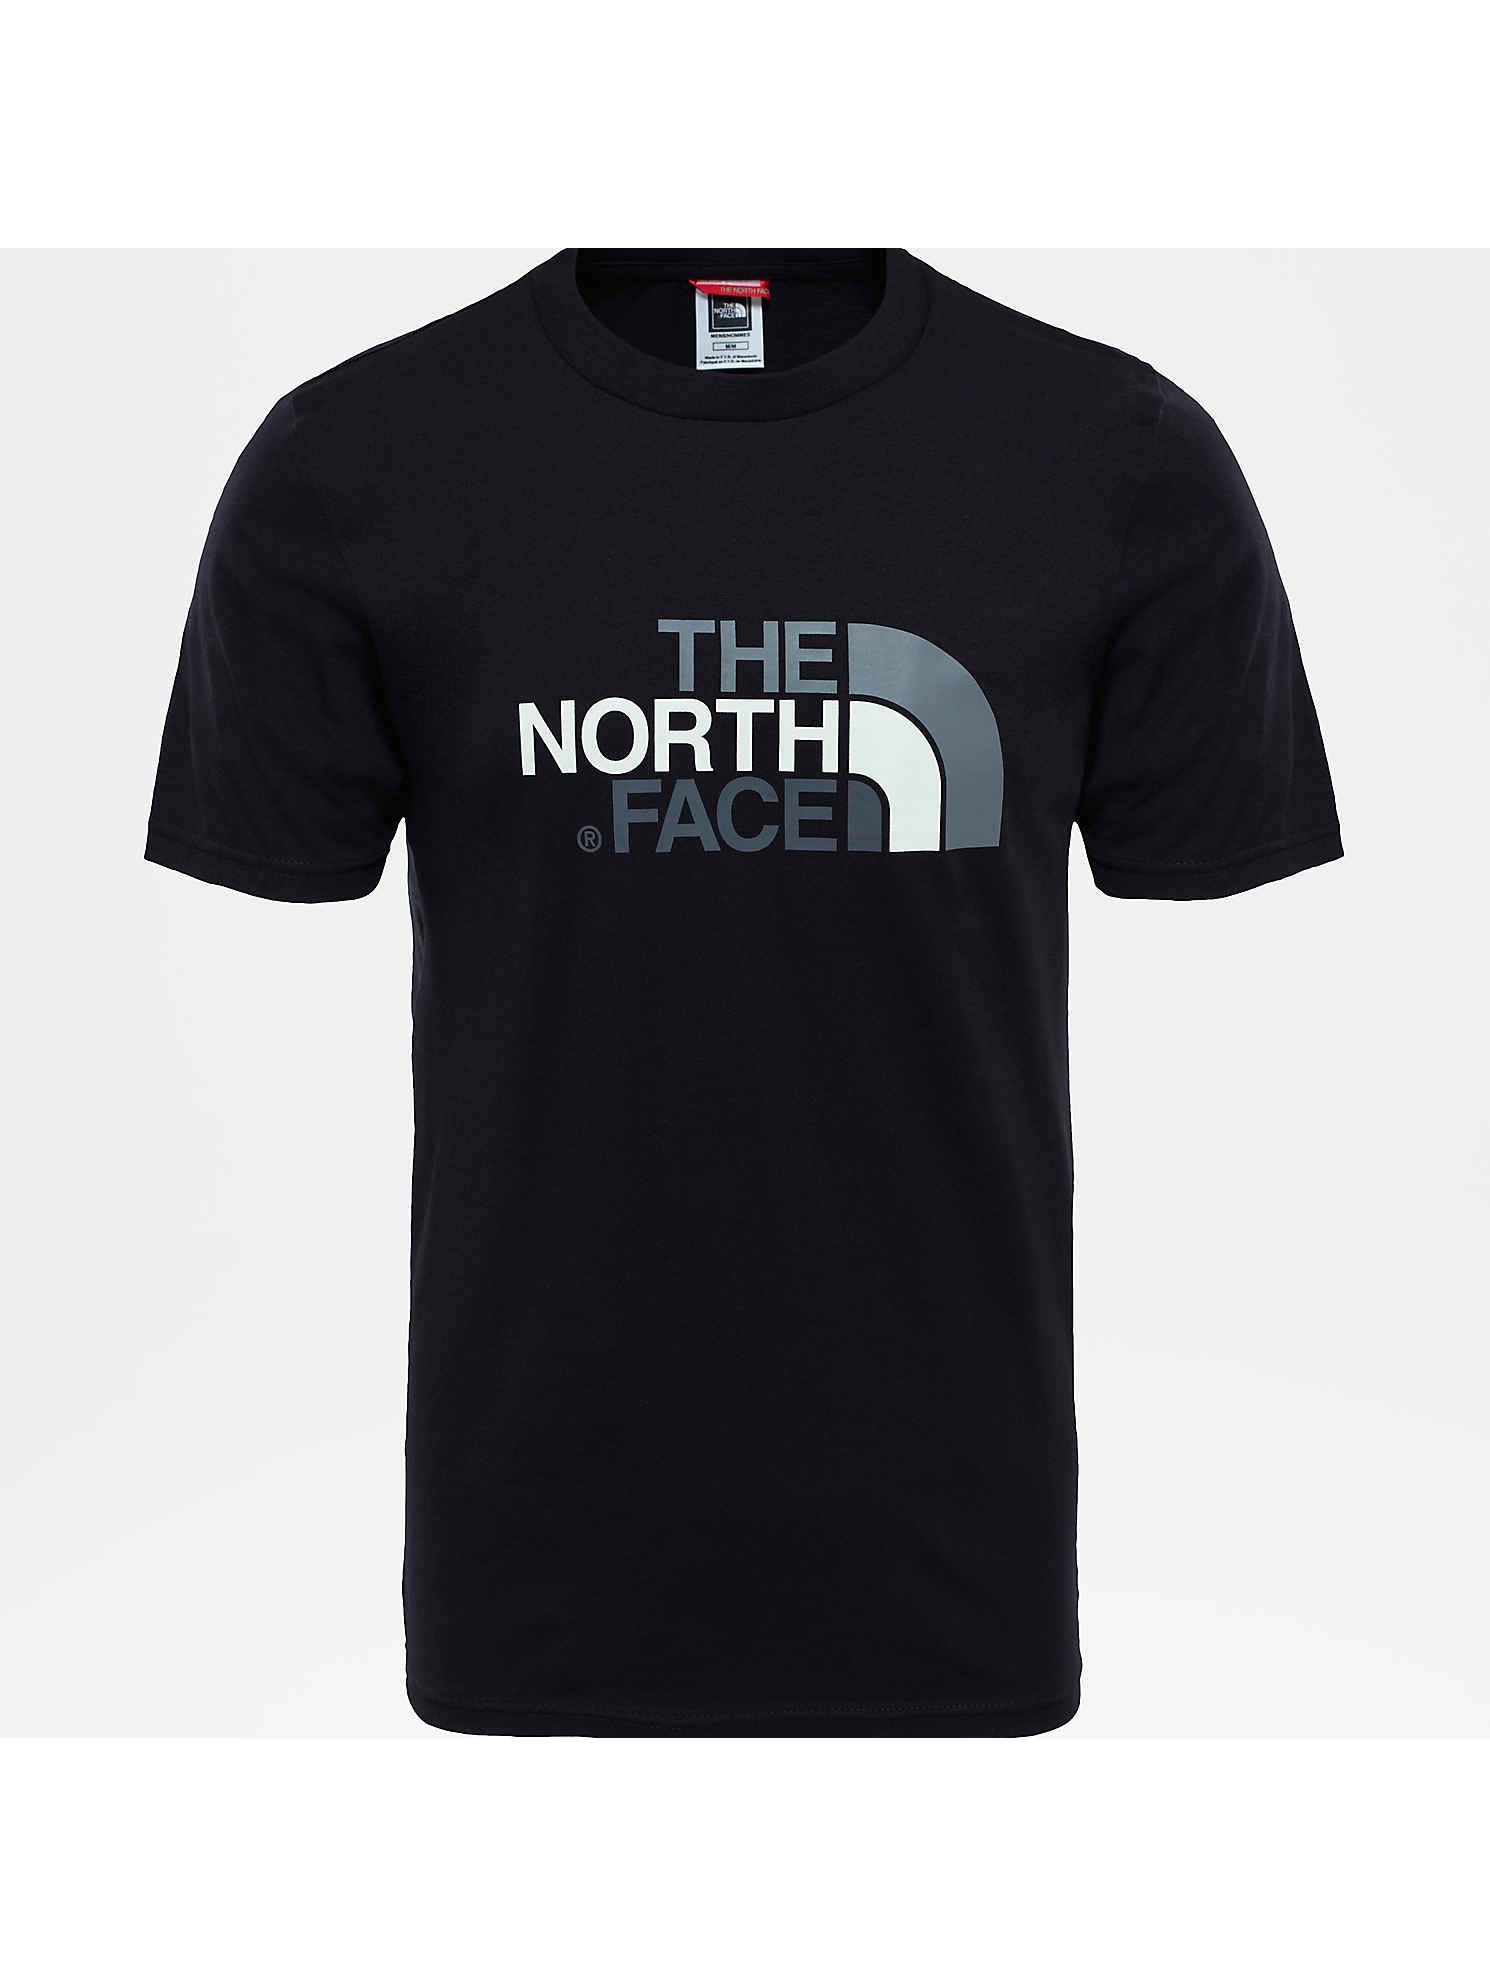 The North Face Men's Easy T-Shirt in Black | Dapper Street